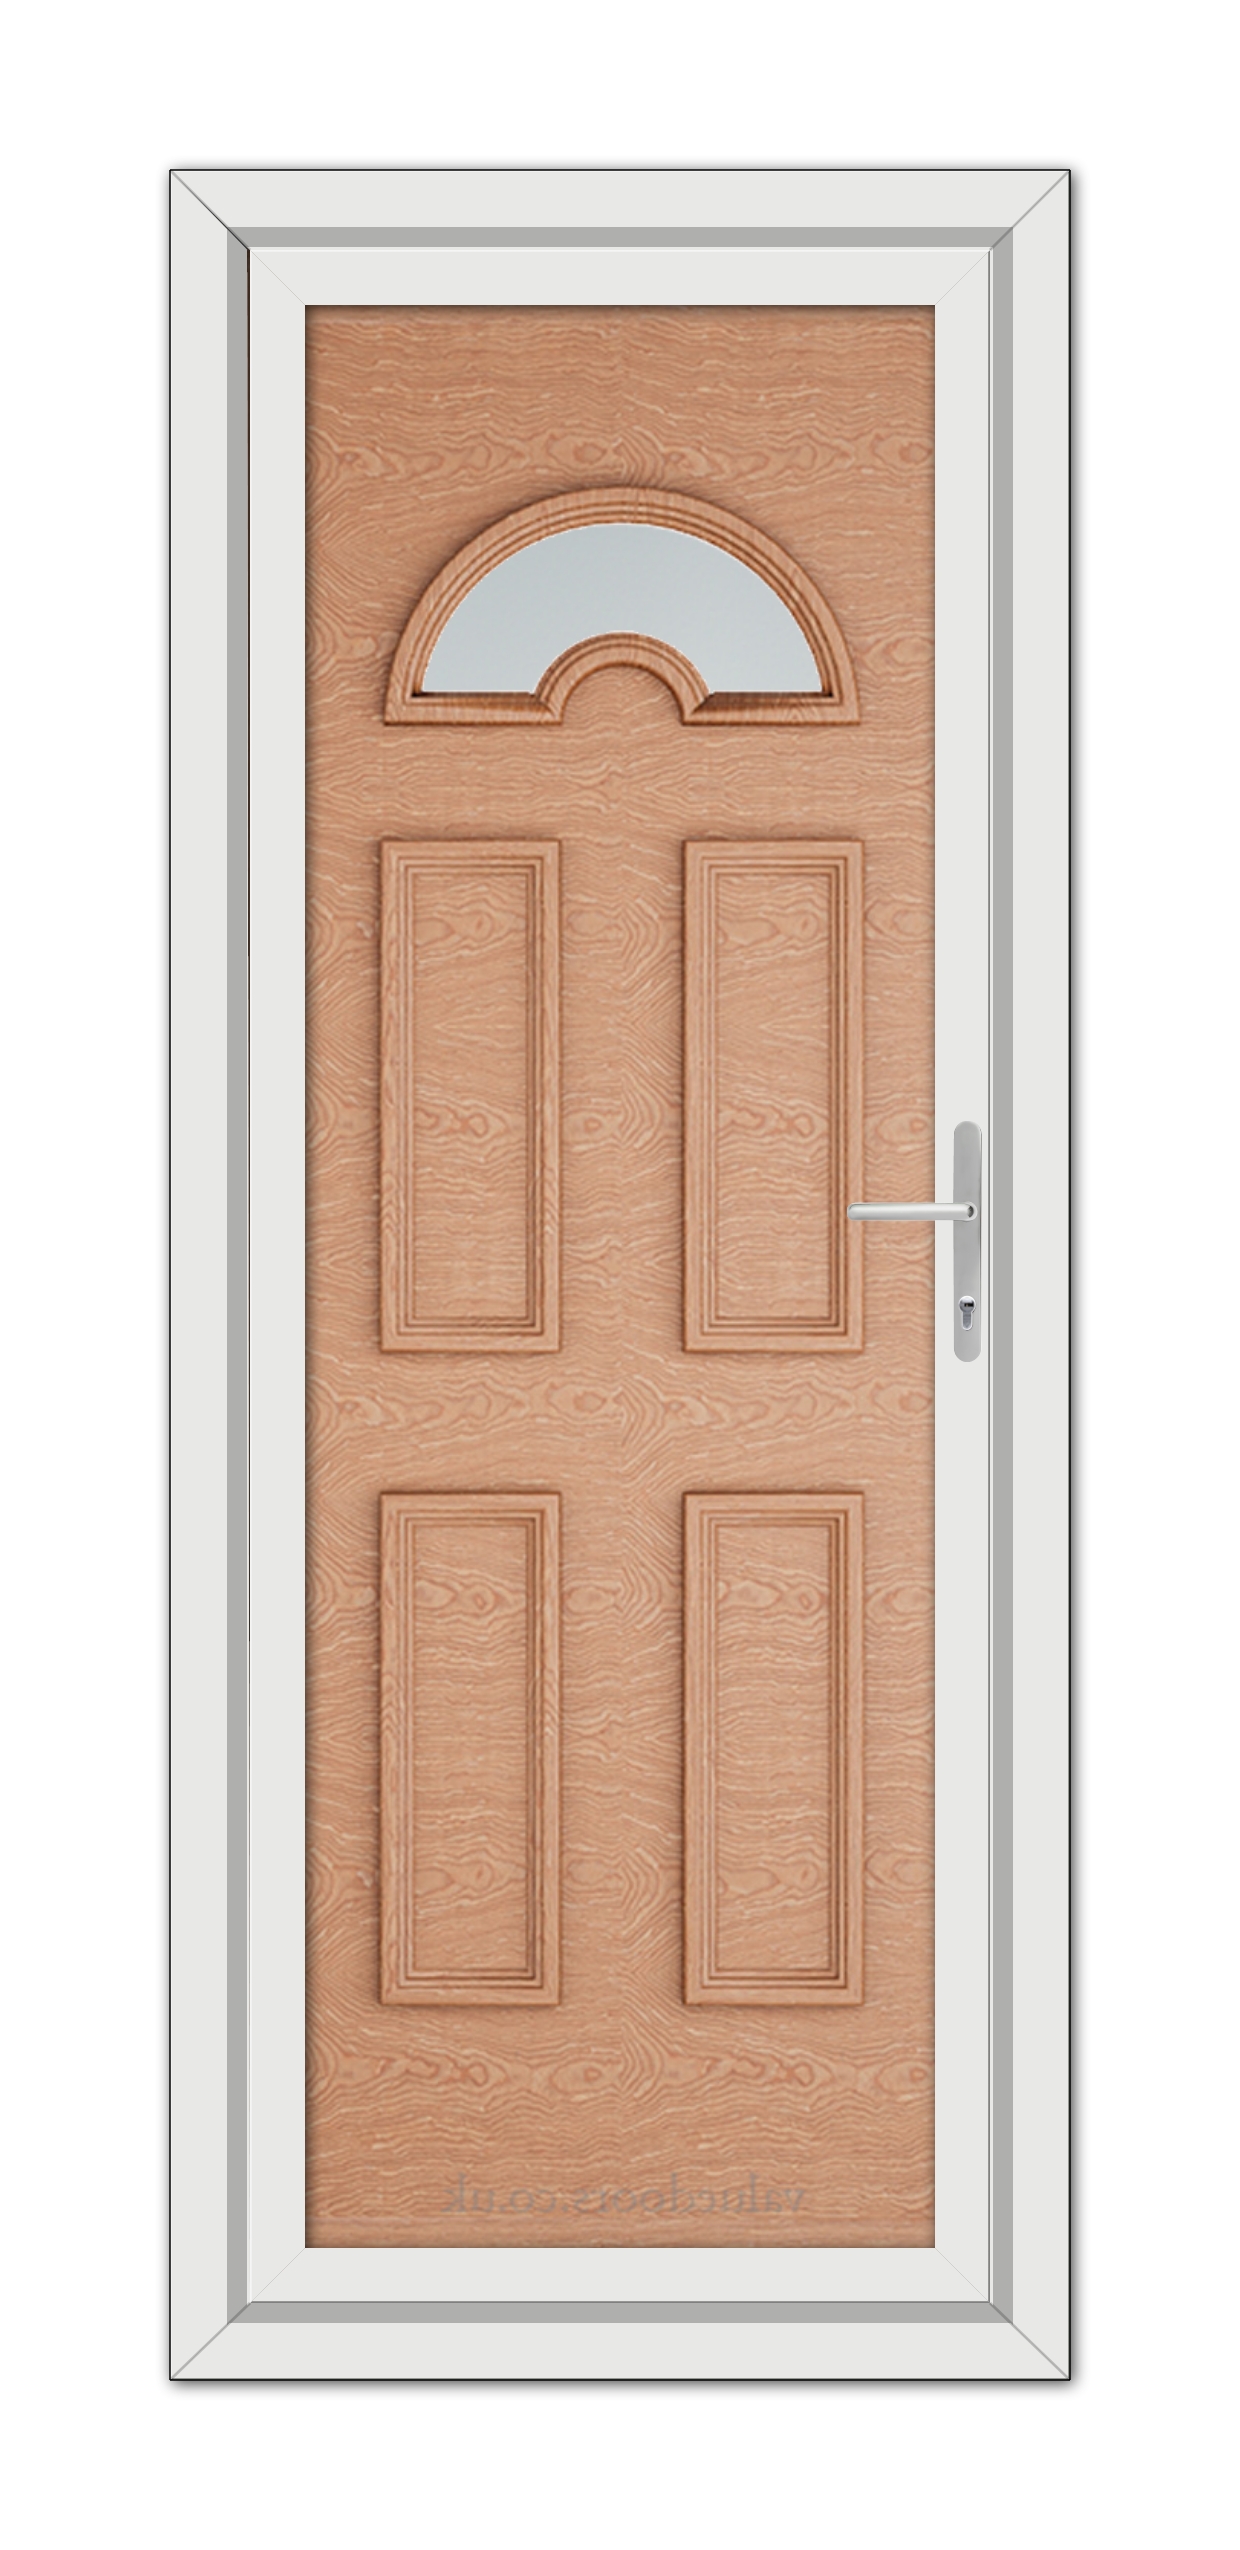 A close-up of an Irish Oak Sandringham uPVC door.